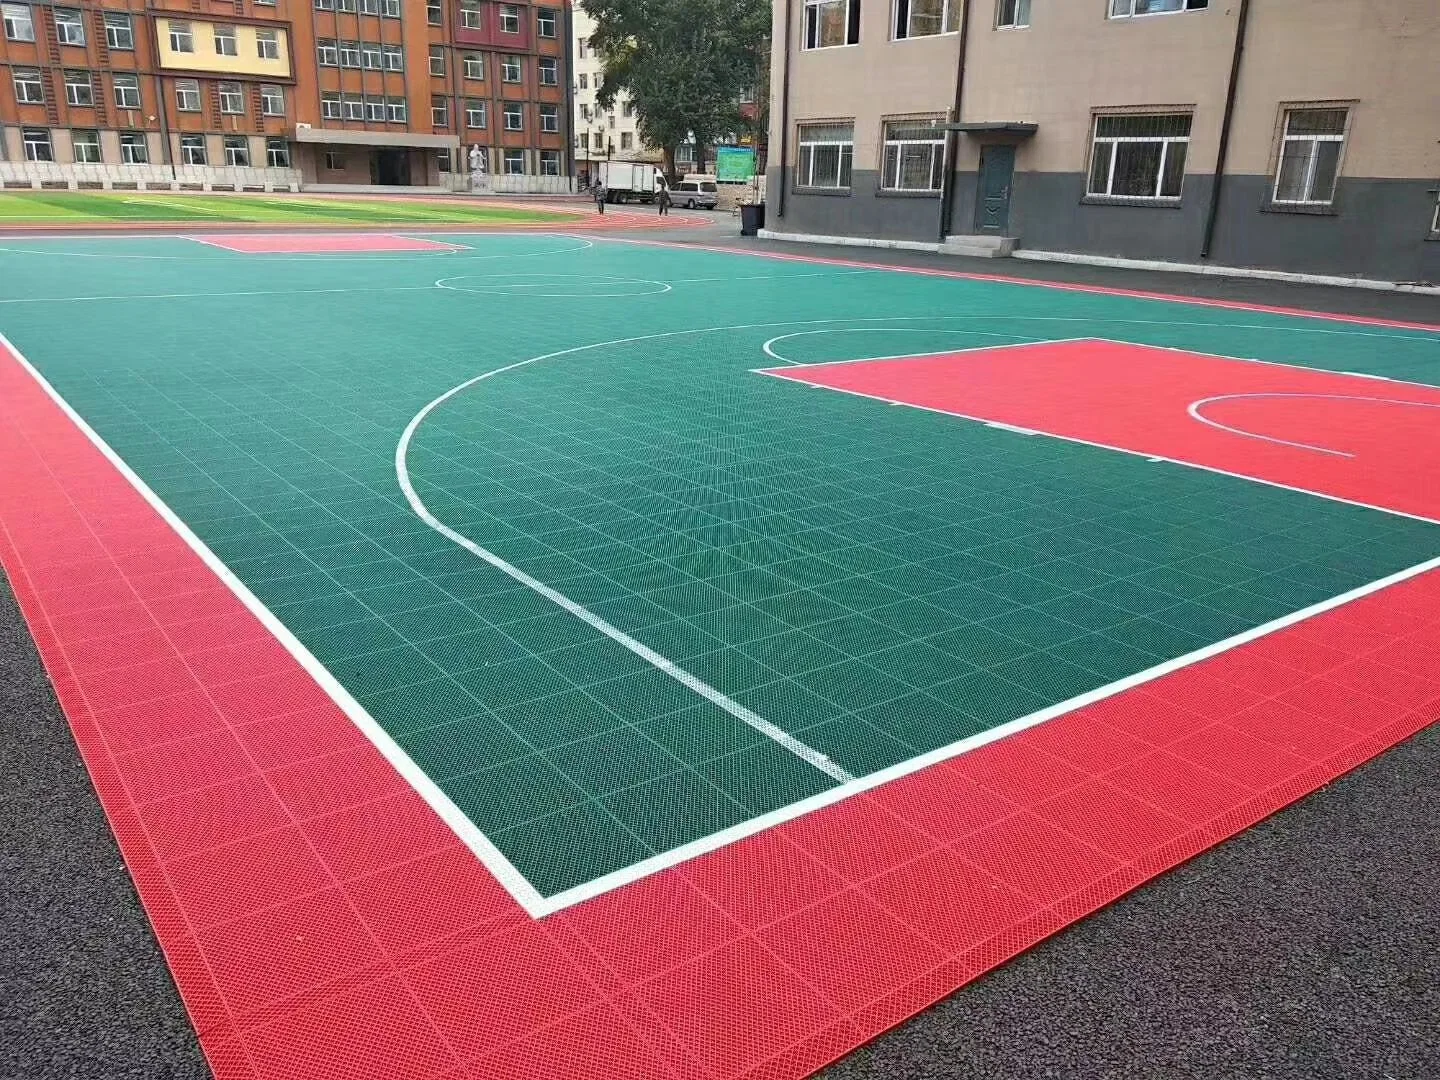 PP Interlock Tiles Modular Outdoor Basketball Tennis Badminton Sport Court Flooring